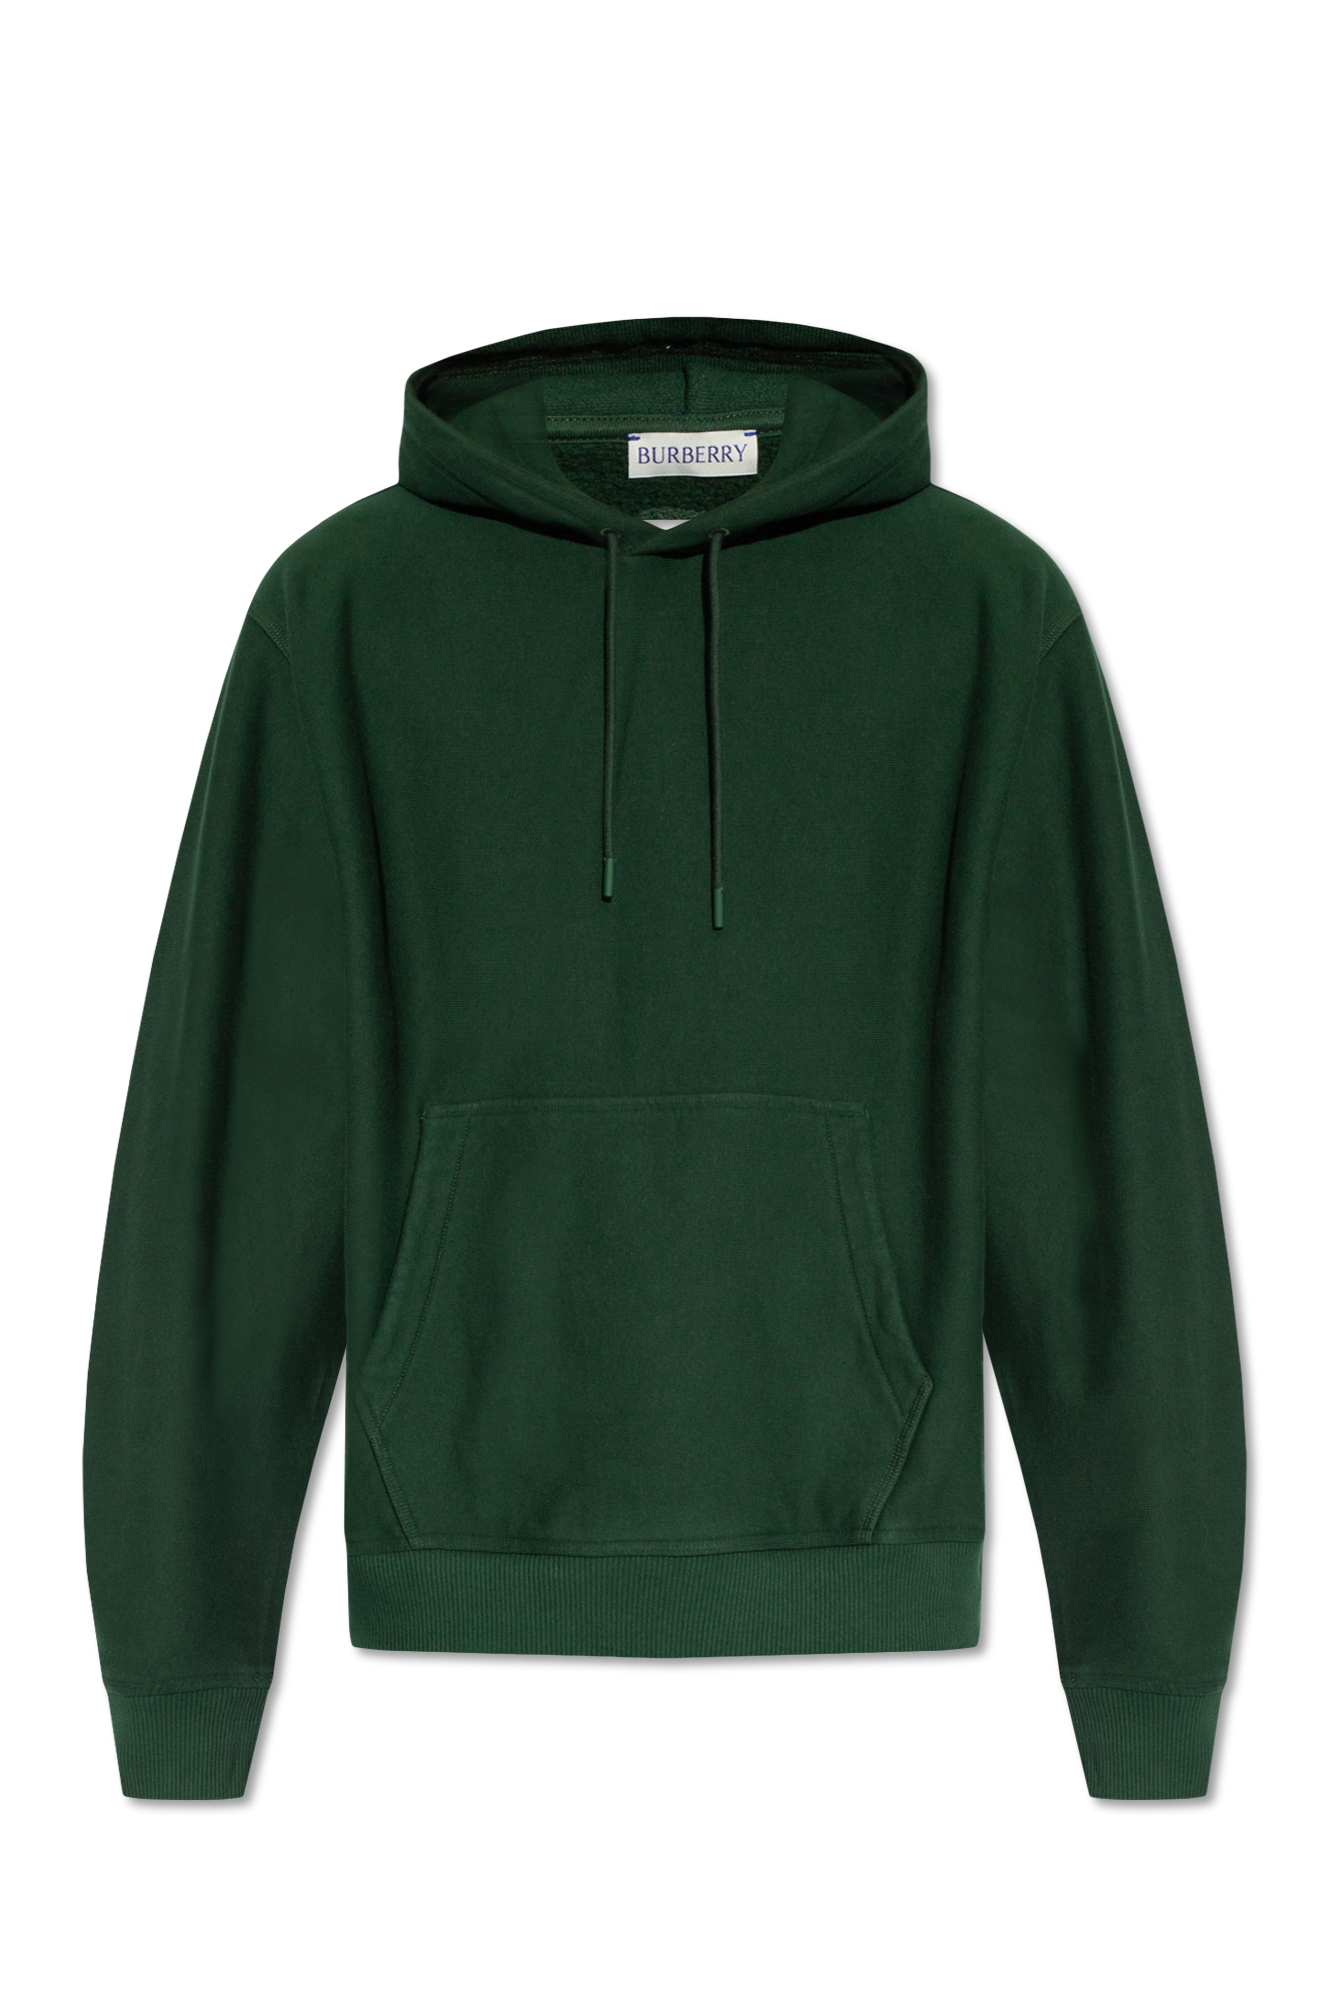 Burberry logo-print drawstring hoodie - Neutrals